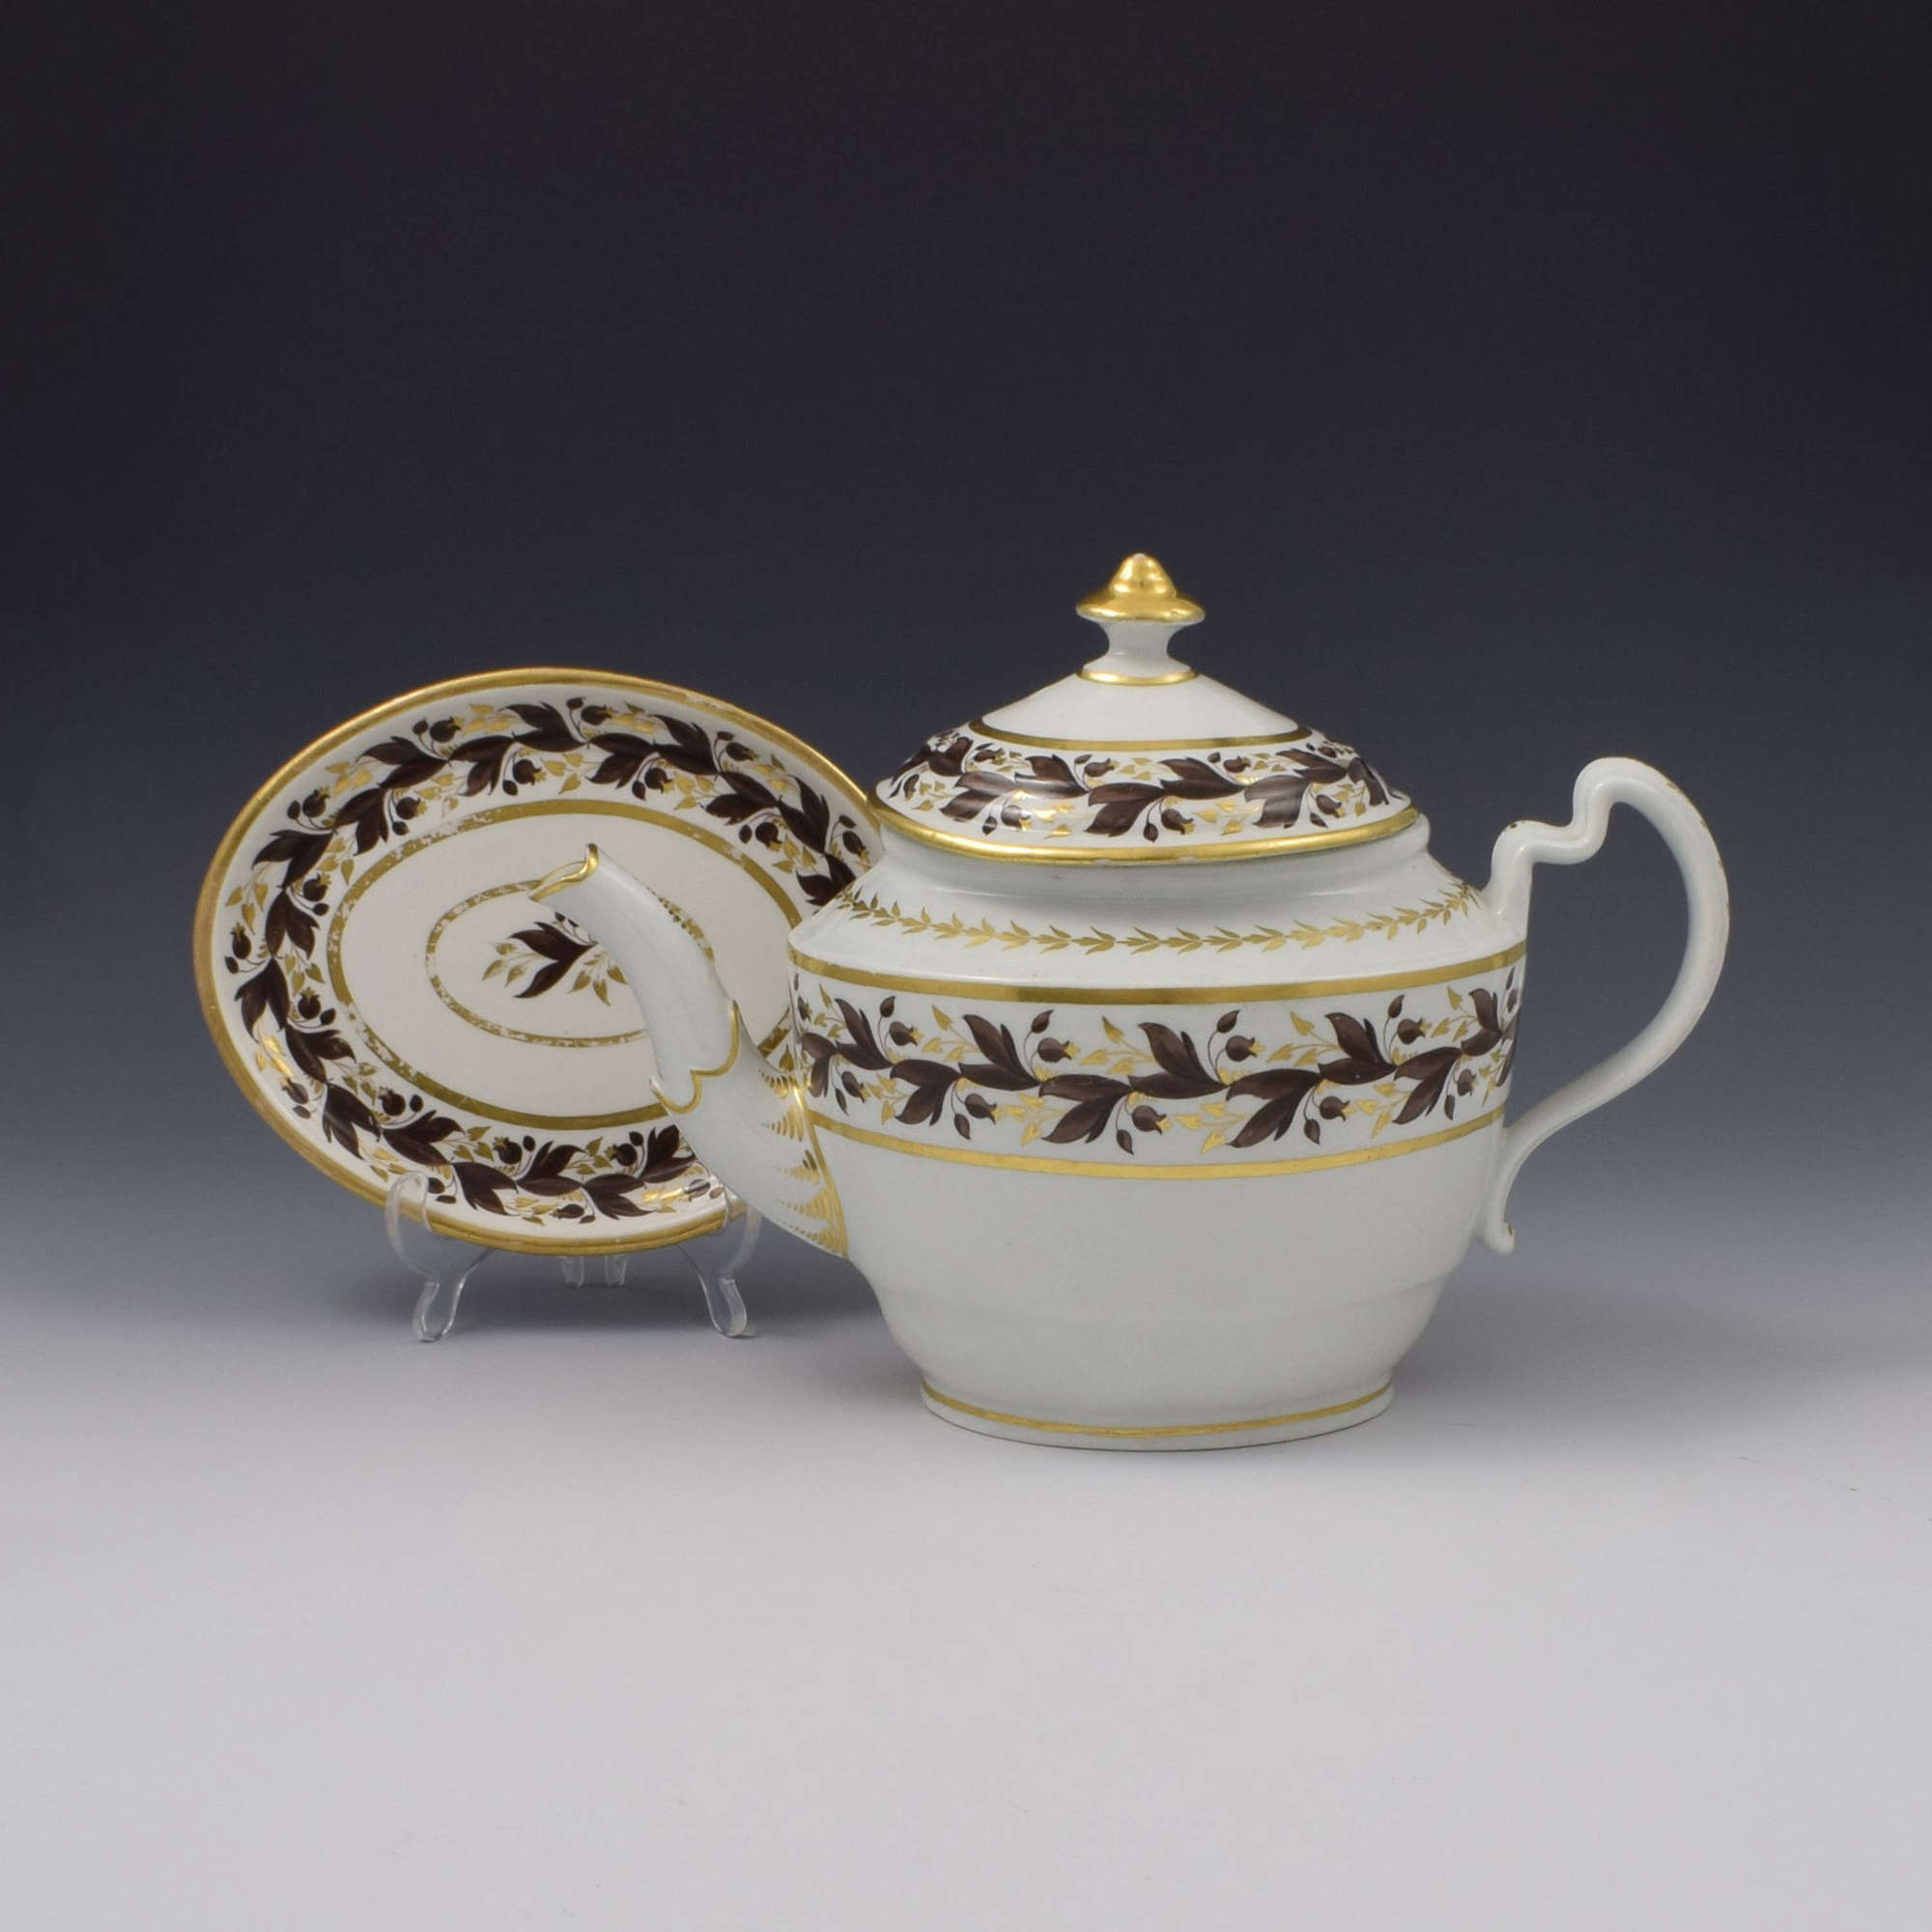 Flight & Barr Period Worcester Porcelain Teapot & Stand c.1800